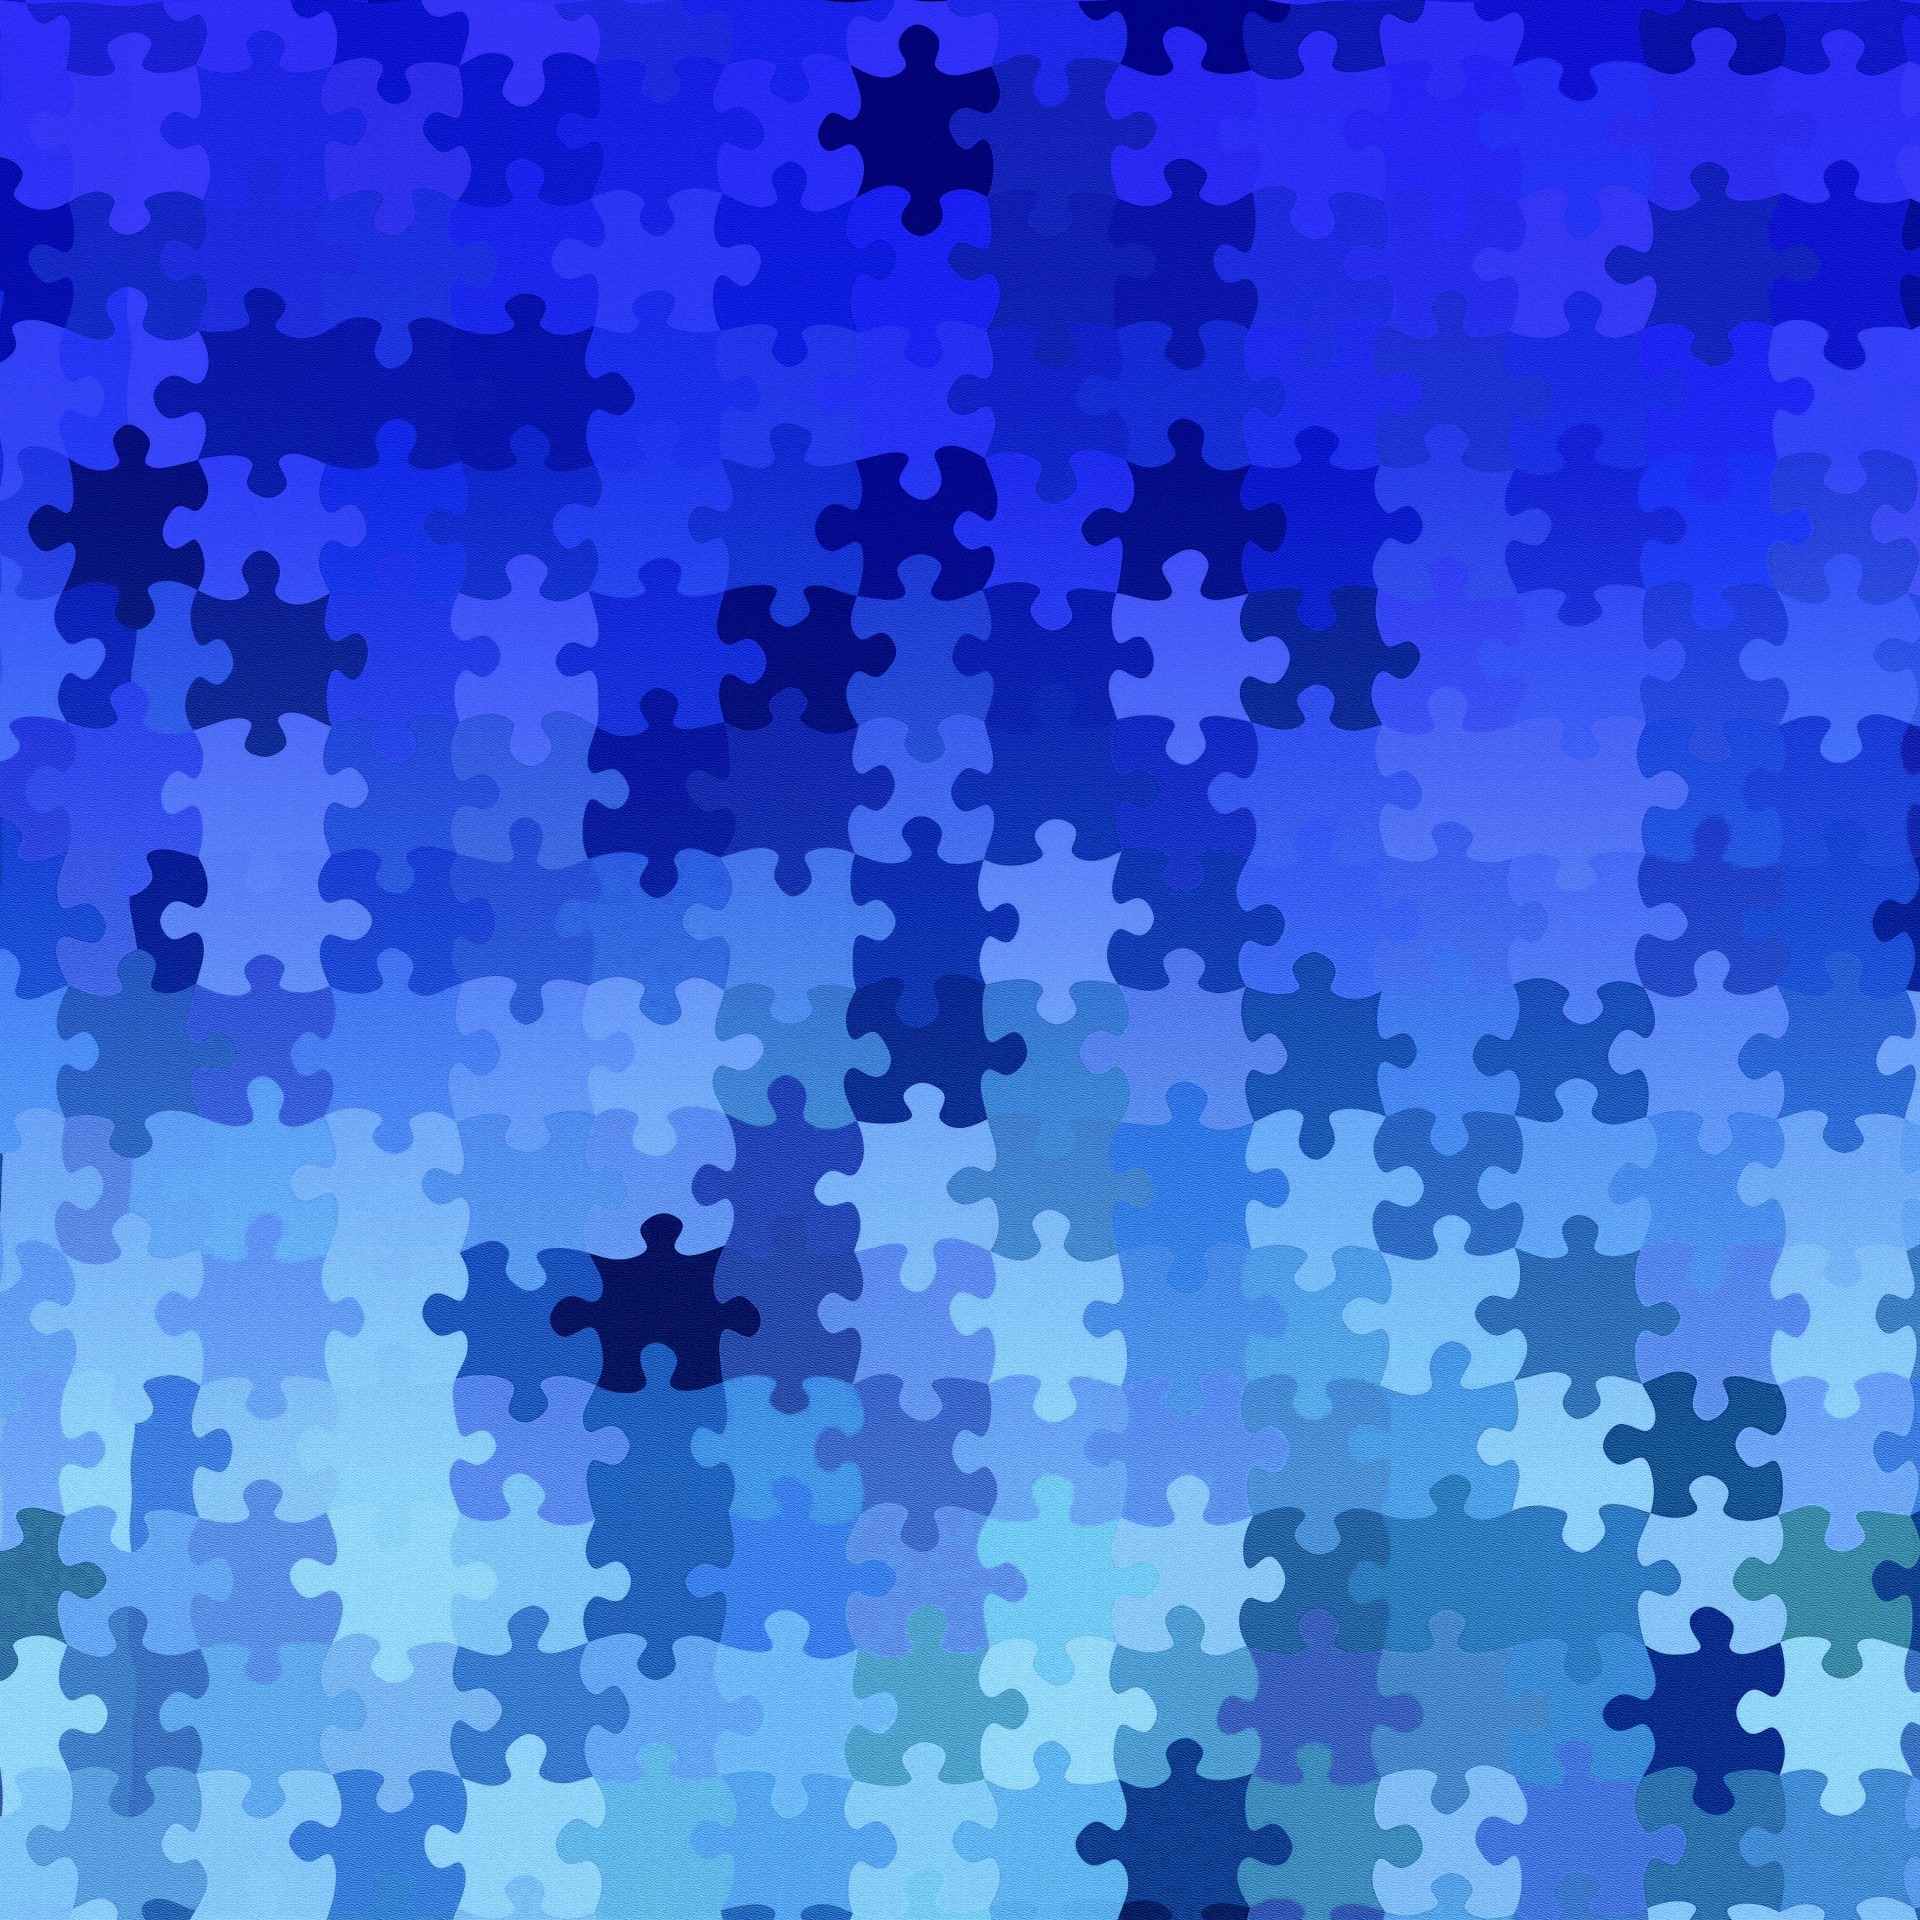 Paper patterns pattern texture free image download